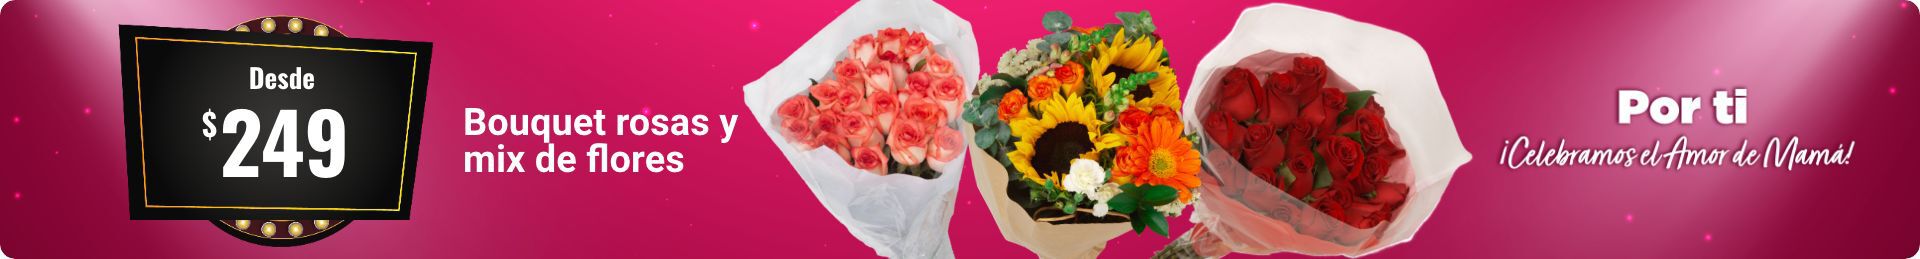 Bouquet de rosas y mix de flores desde $249